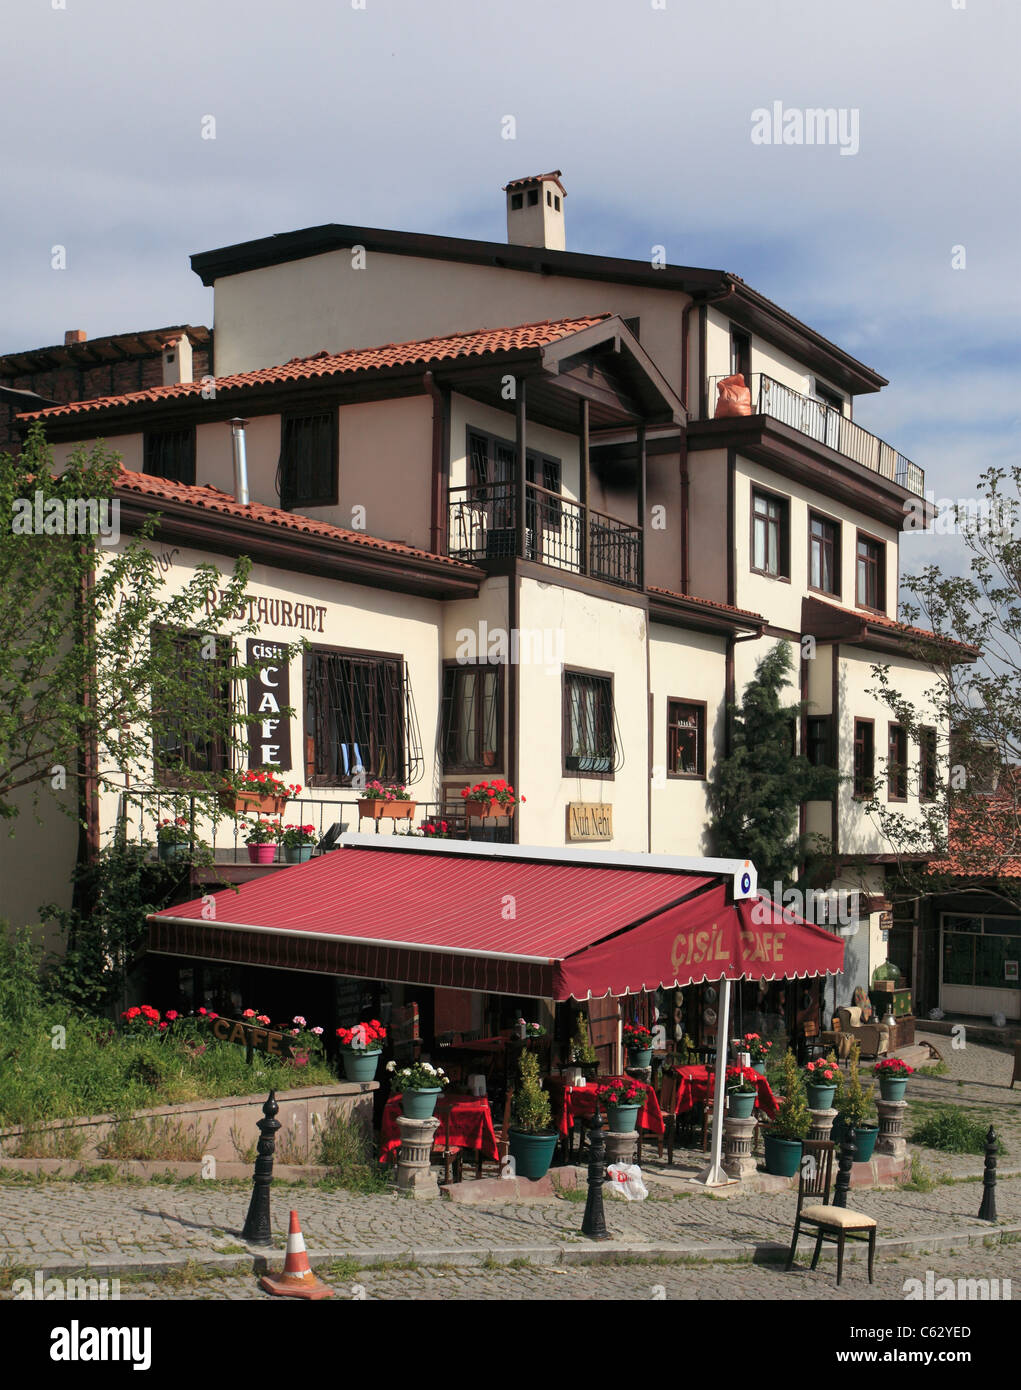 Turkey, Ankara, Ulus, old town, cafe, Stock Photo